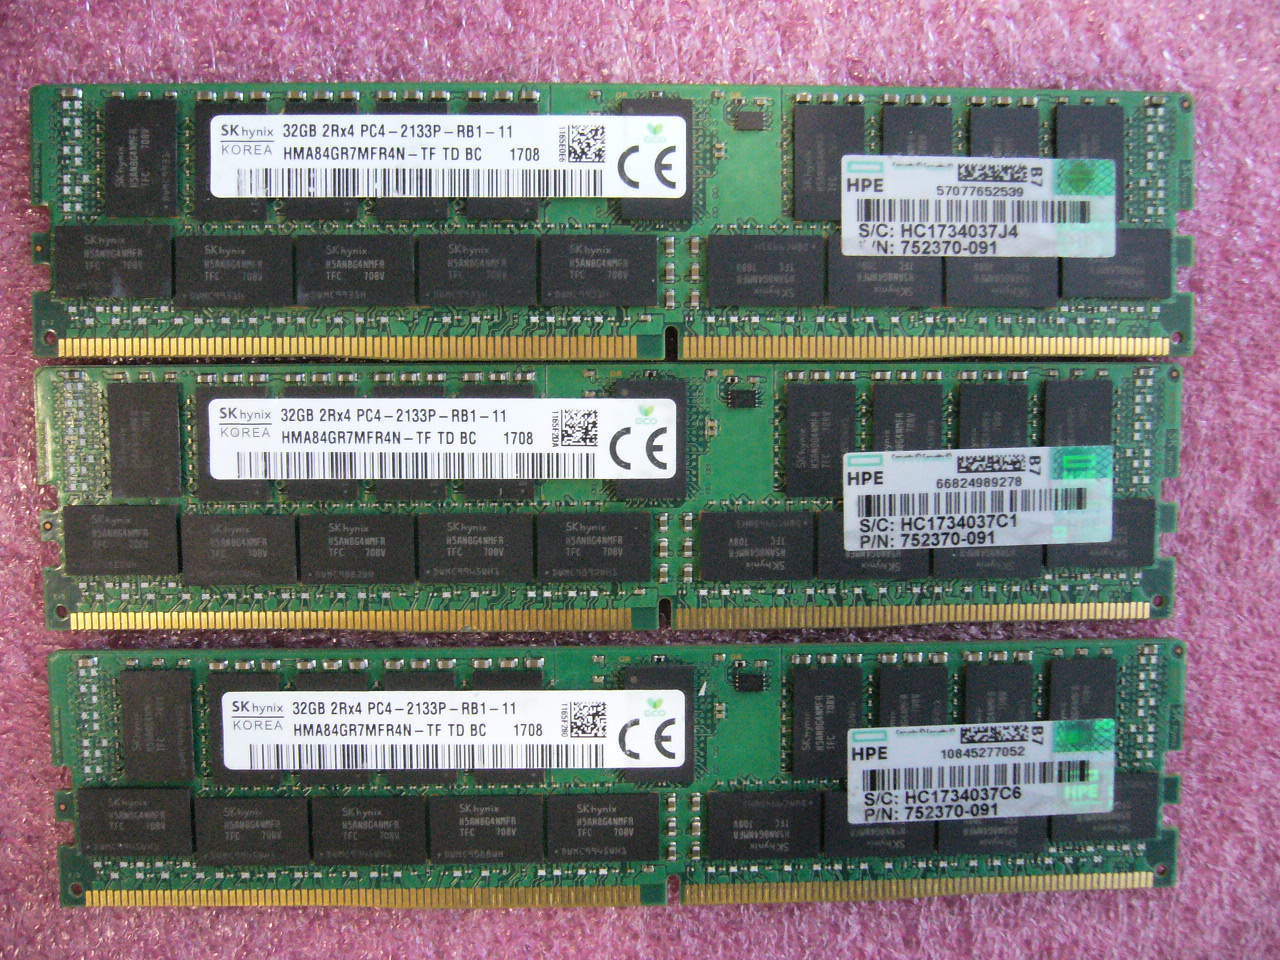 QTY 1x 32GB DDR4 2Rx4 PC4-2133P-RB1 ECC Registered memory SK Hynix HP 752370-091 - Click Image to Close